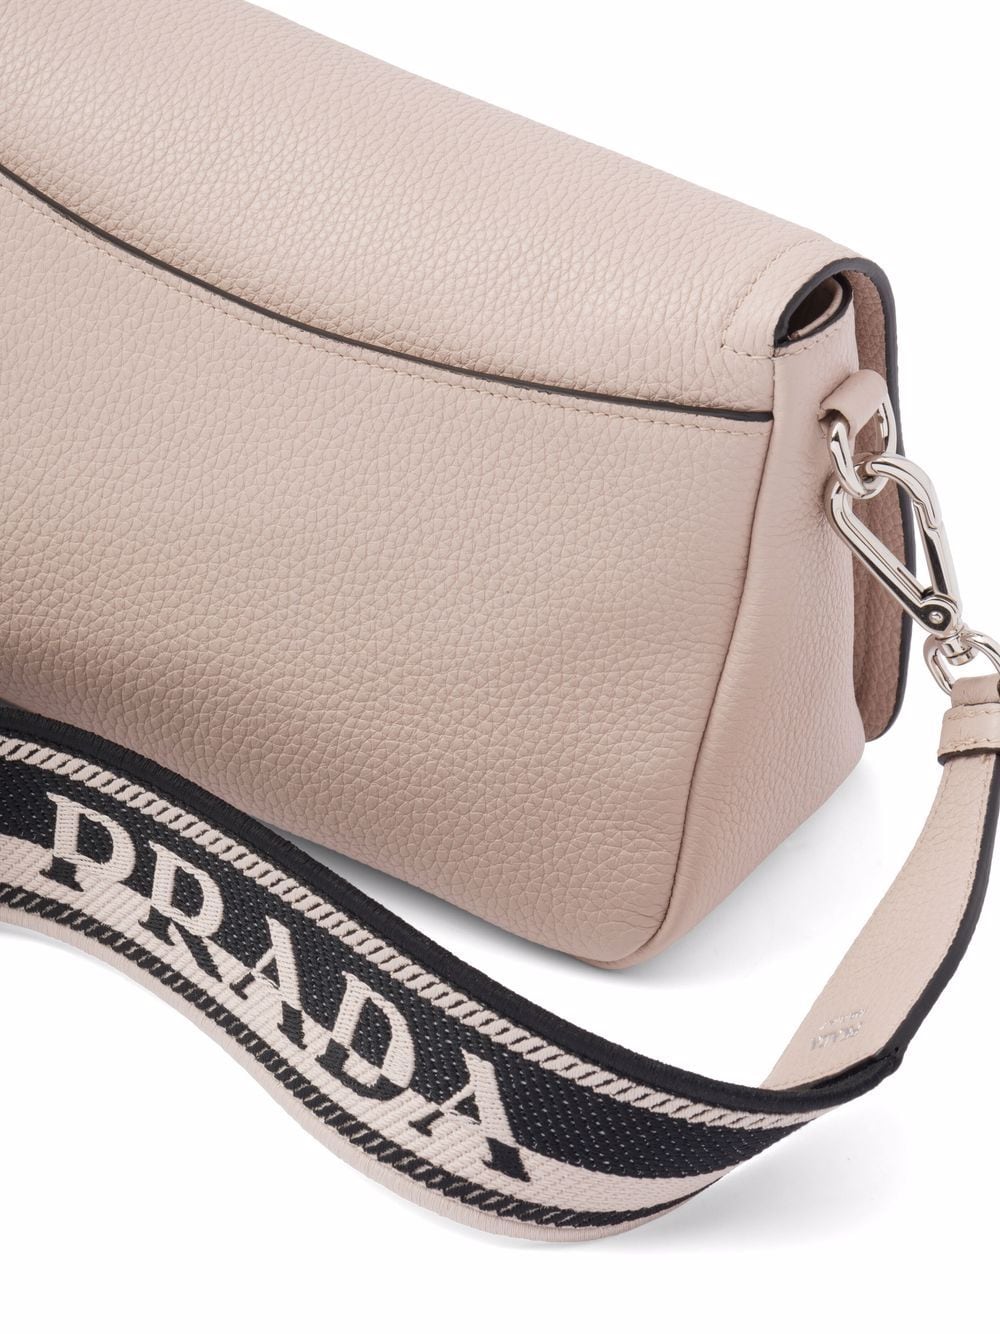 Prada Saffiano Leather Shoulder Bag - Neutrals